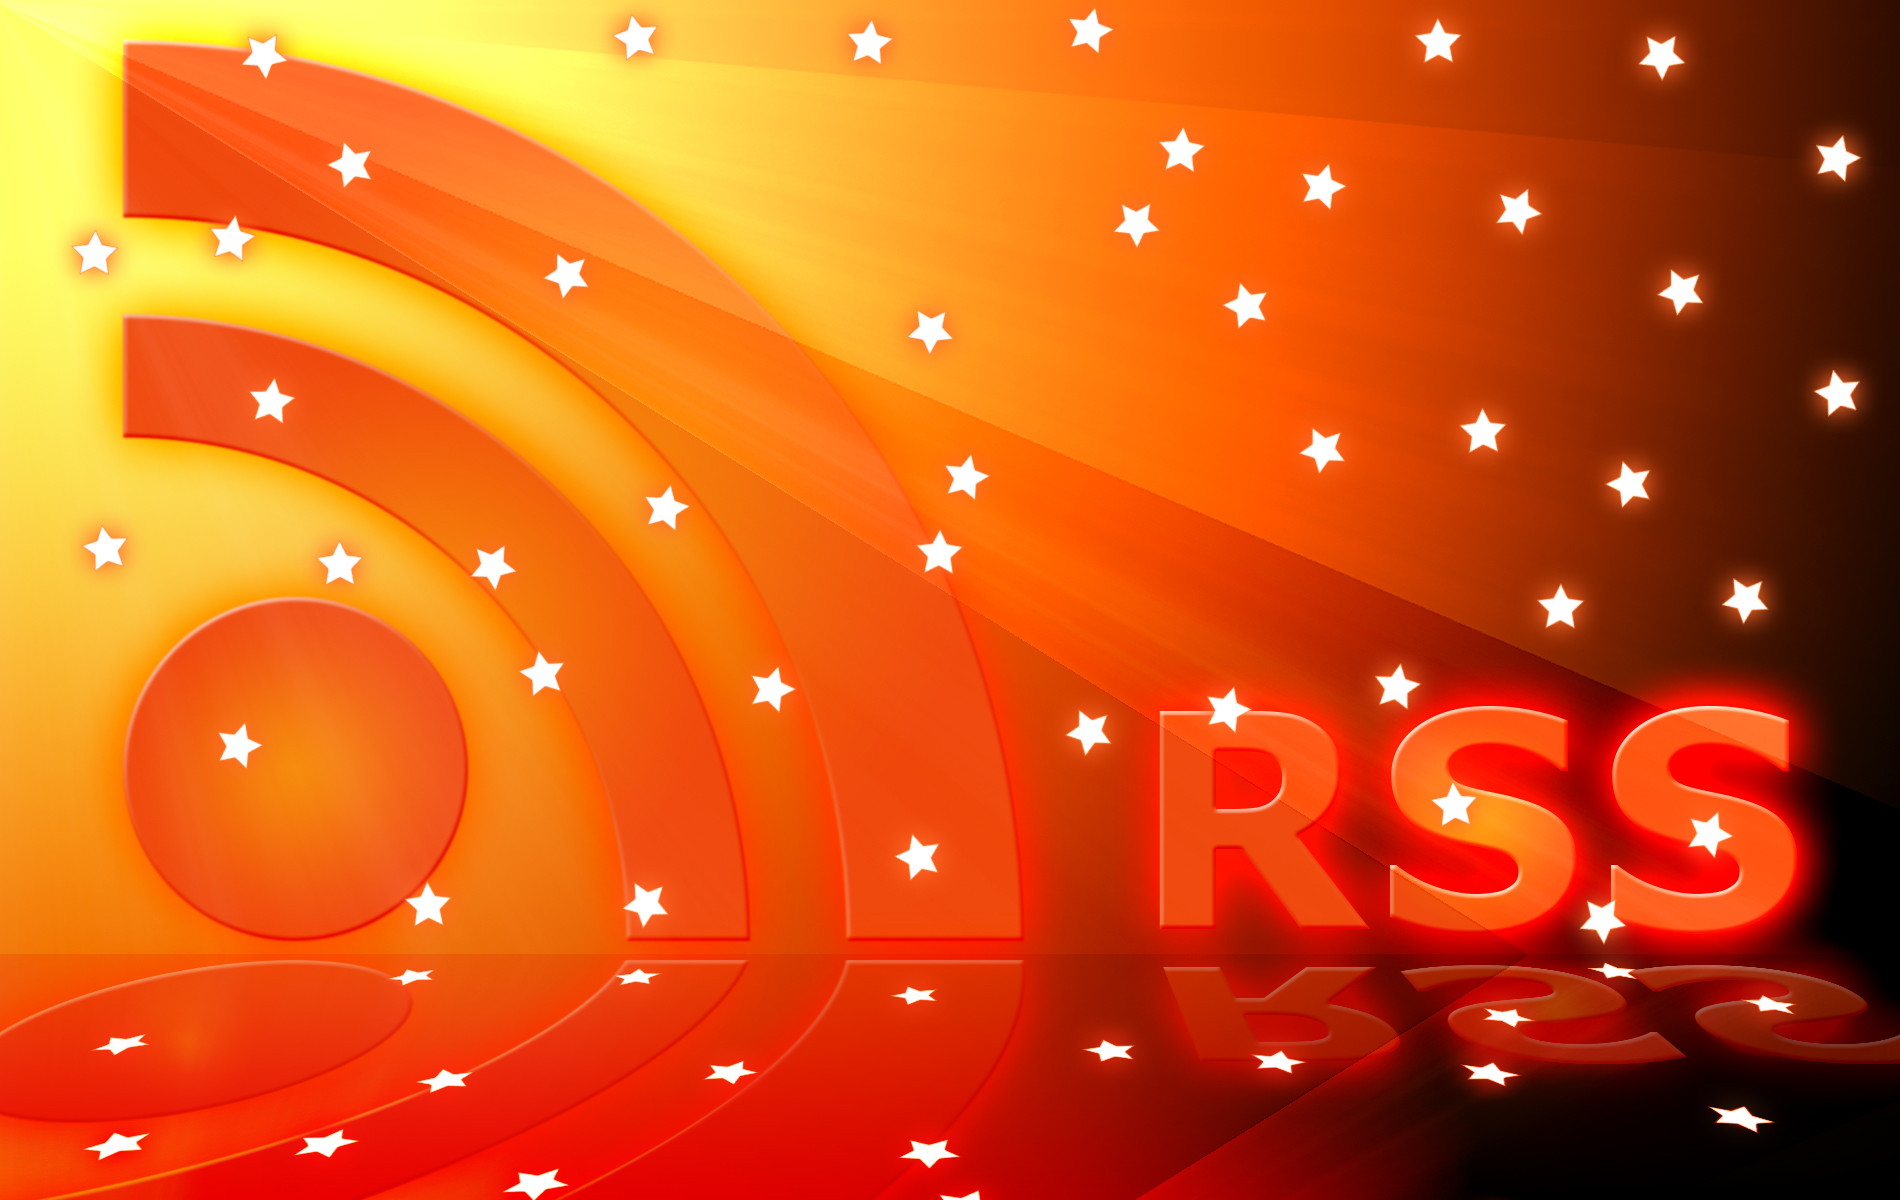 rss 바탕 화면,주황색,빨간,빛,호박색,원